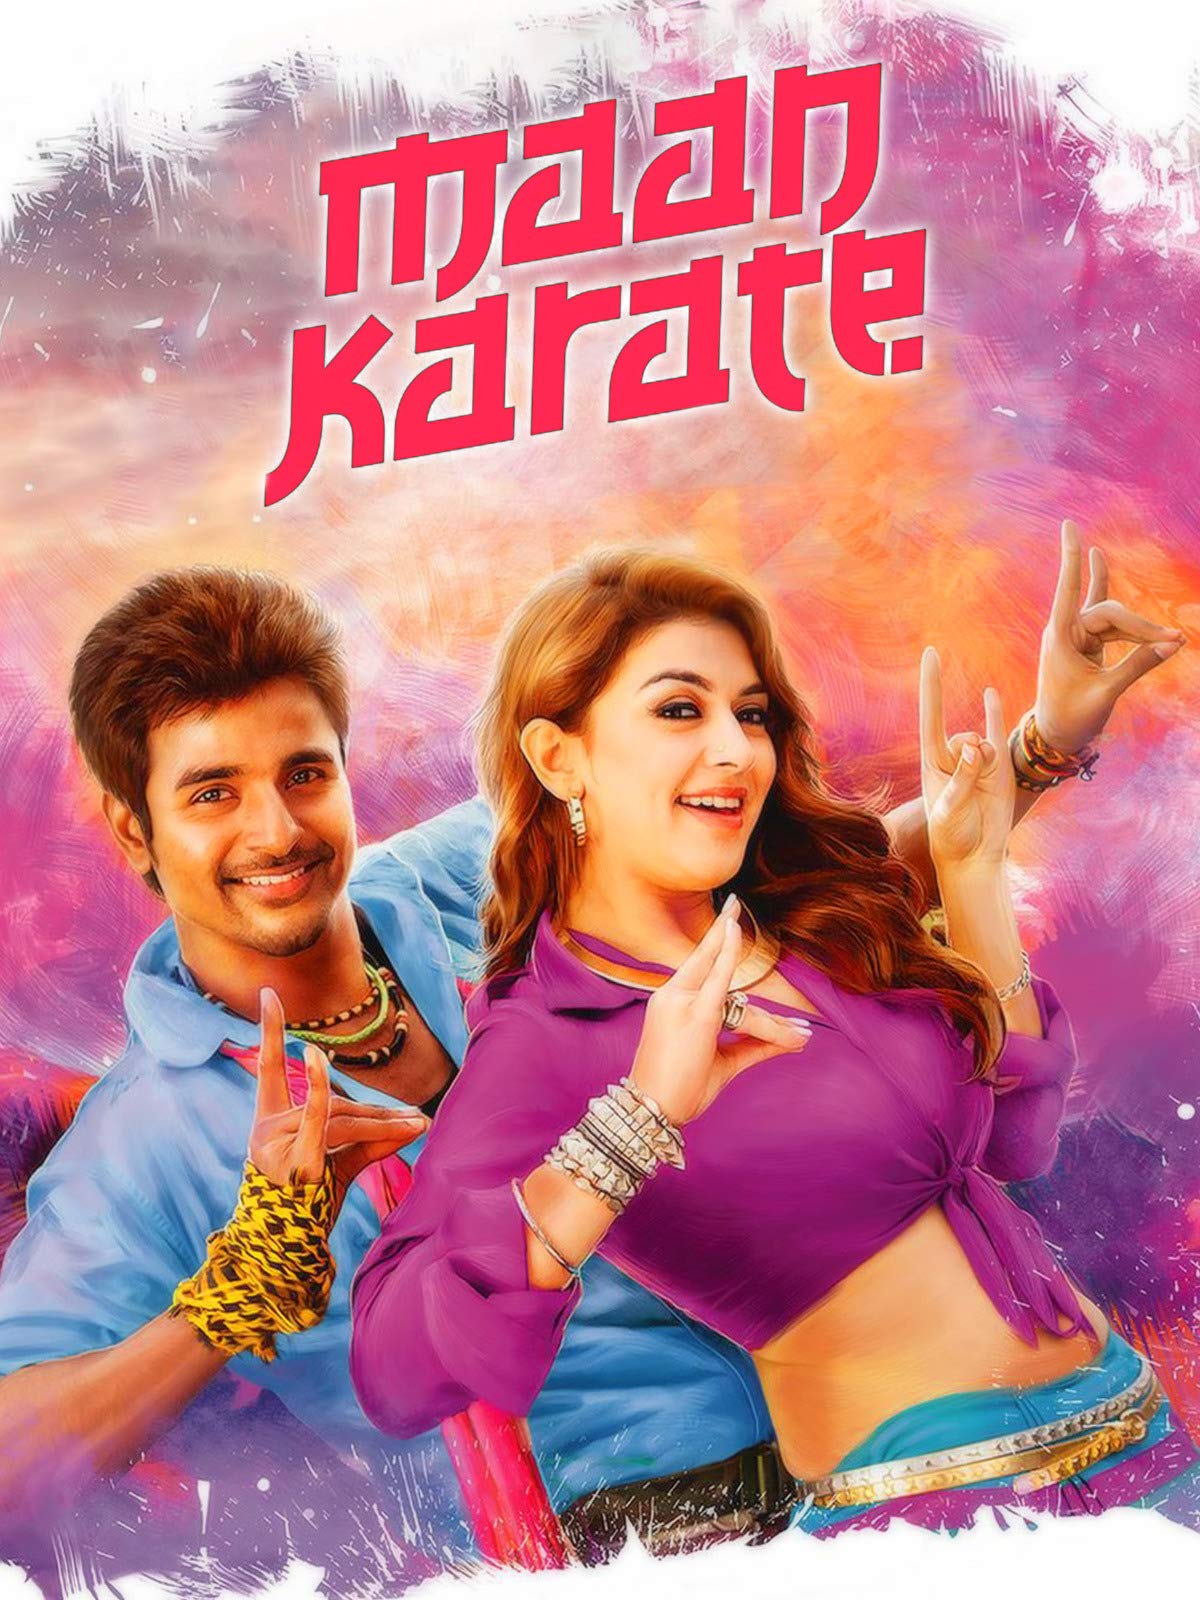 Tamil Dubbed Movies HD: Maan Karate (2014)